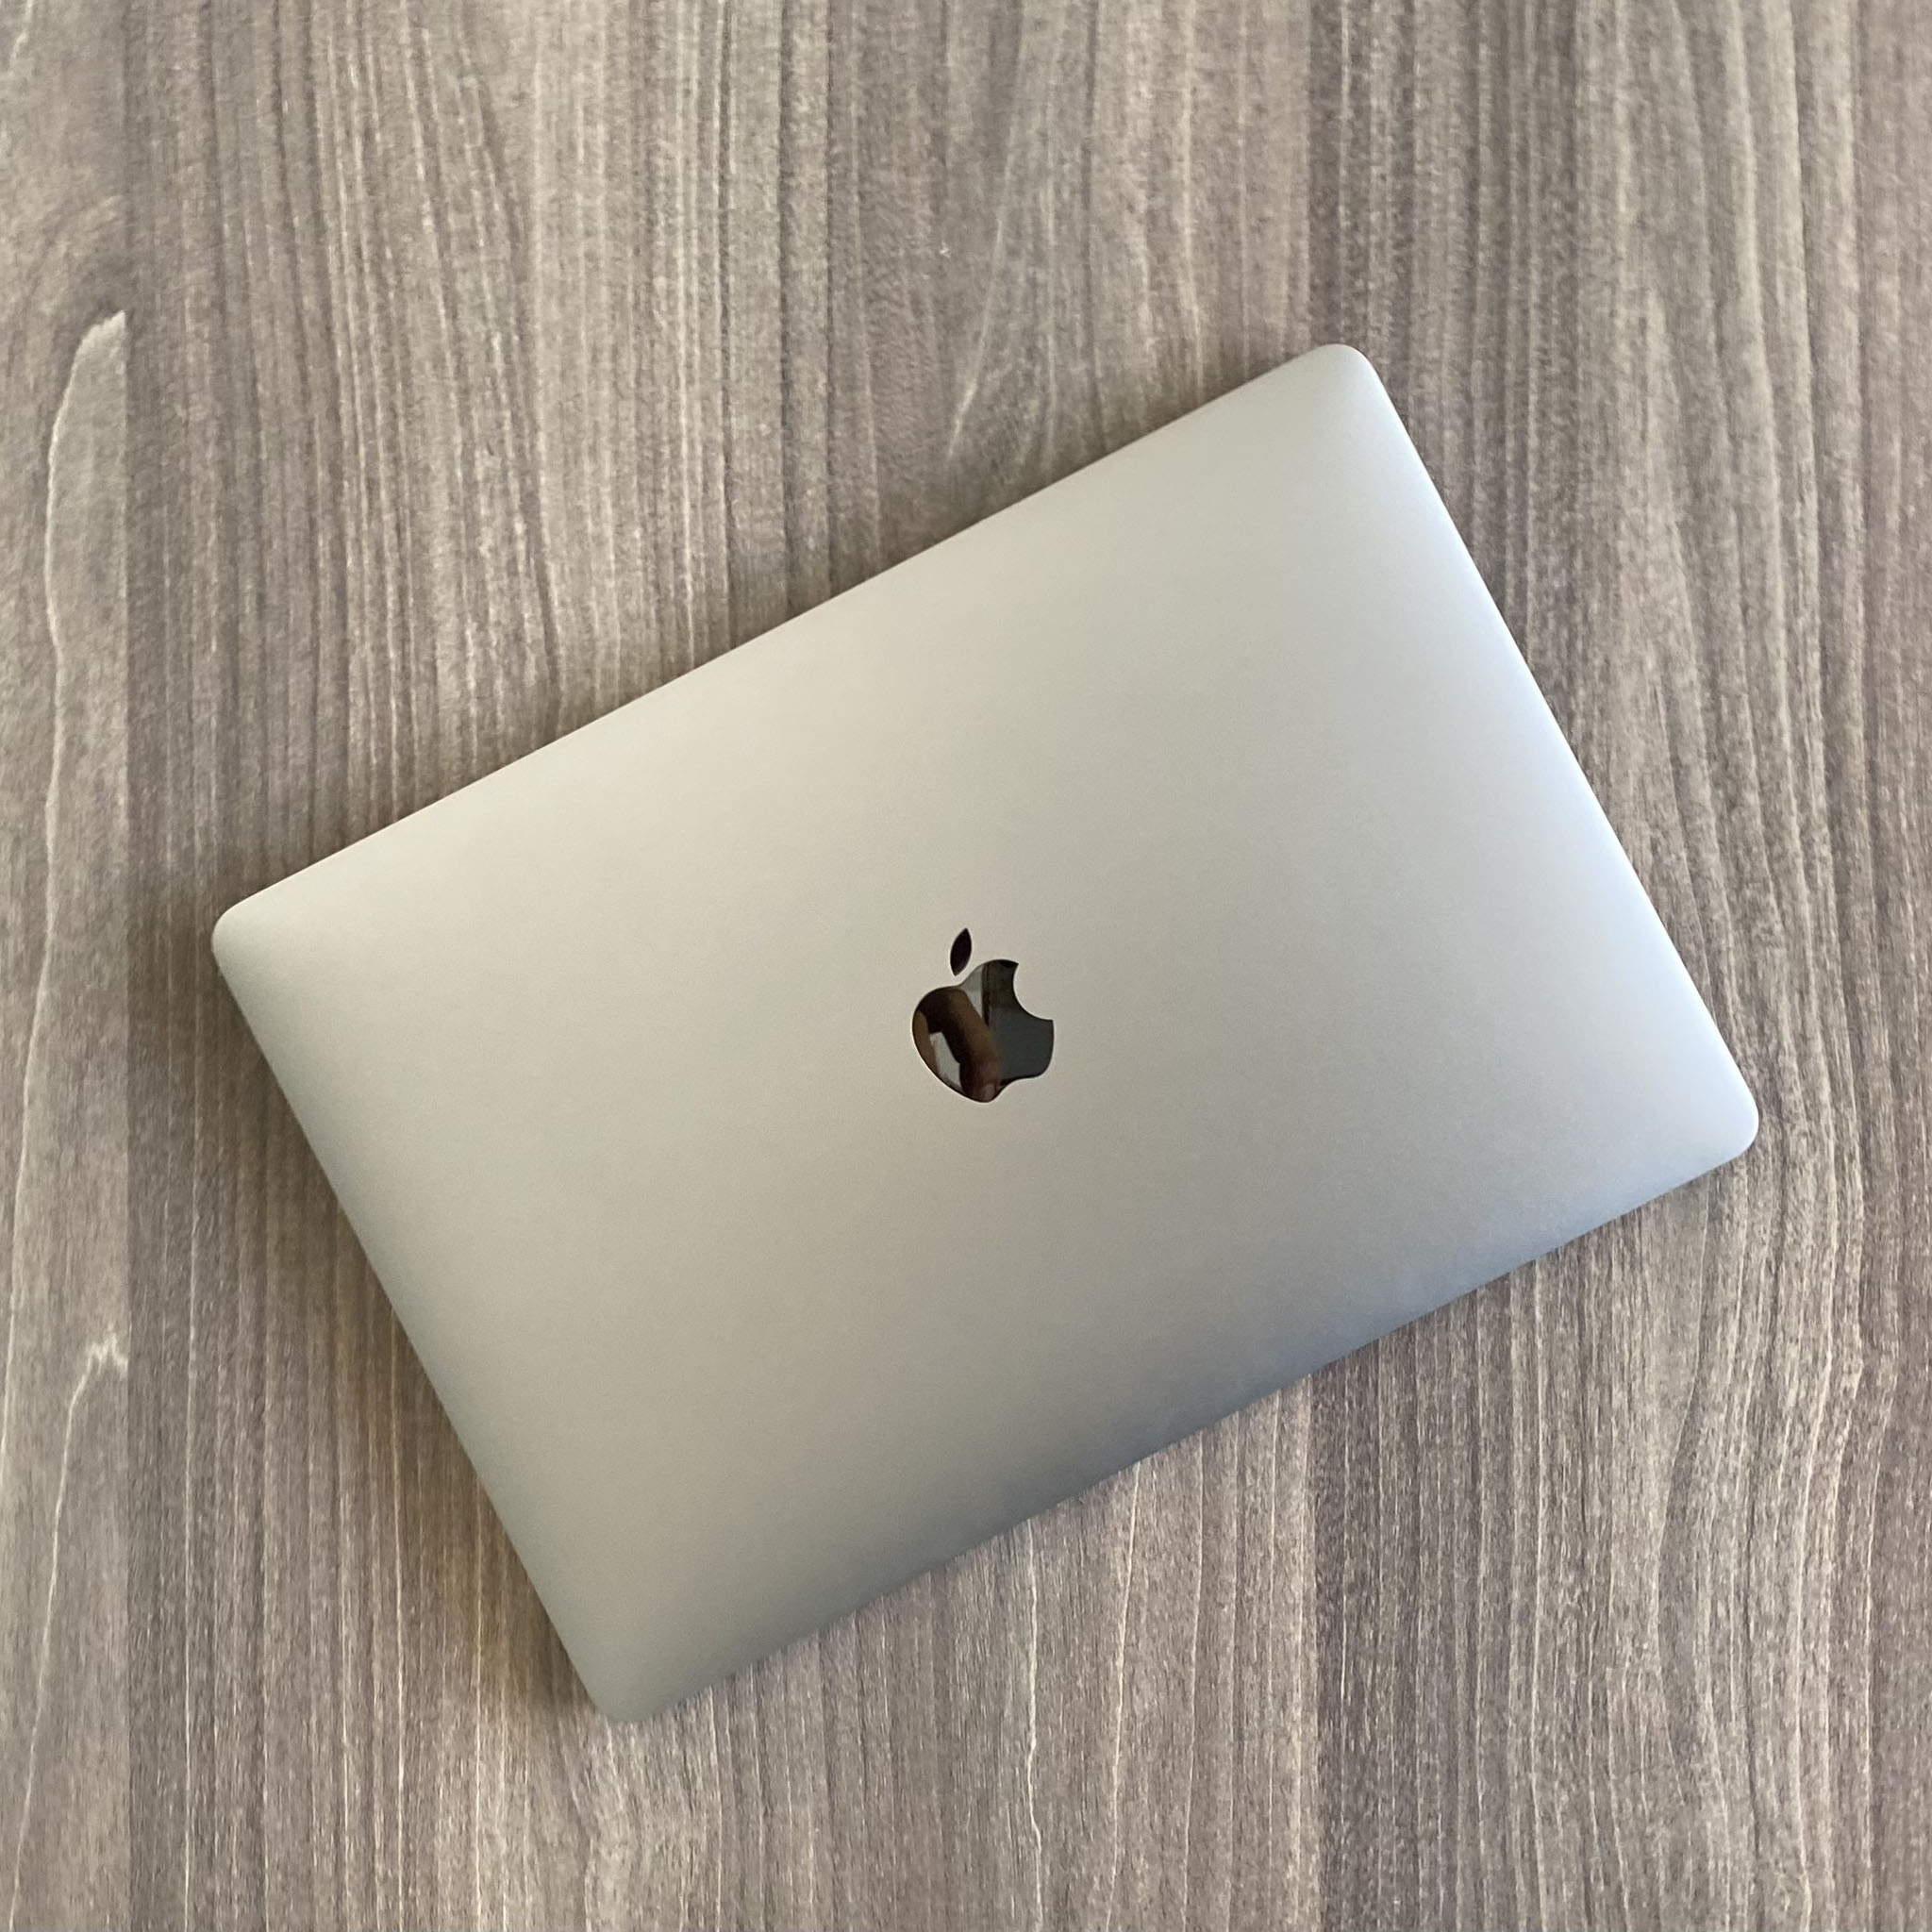 MacBook Pro (13-inch, 2019, Two Thunderbolt 3 ports) Core i5